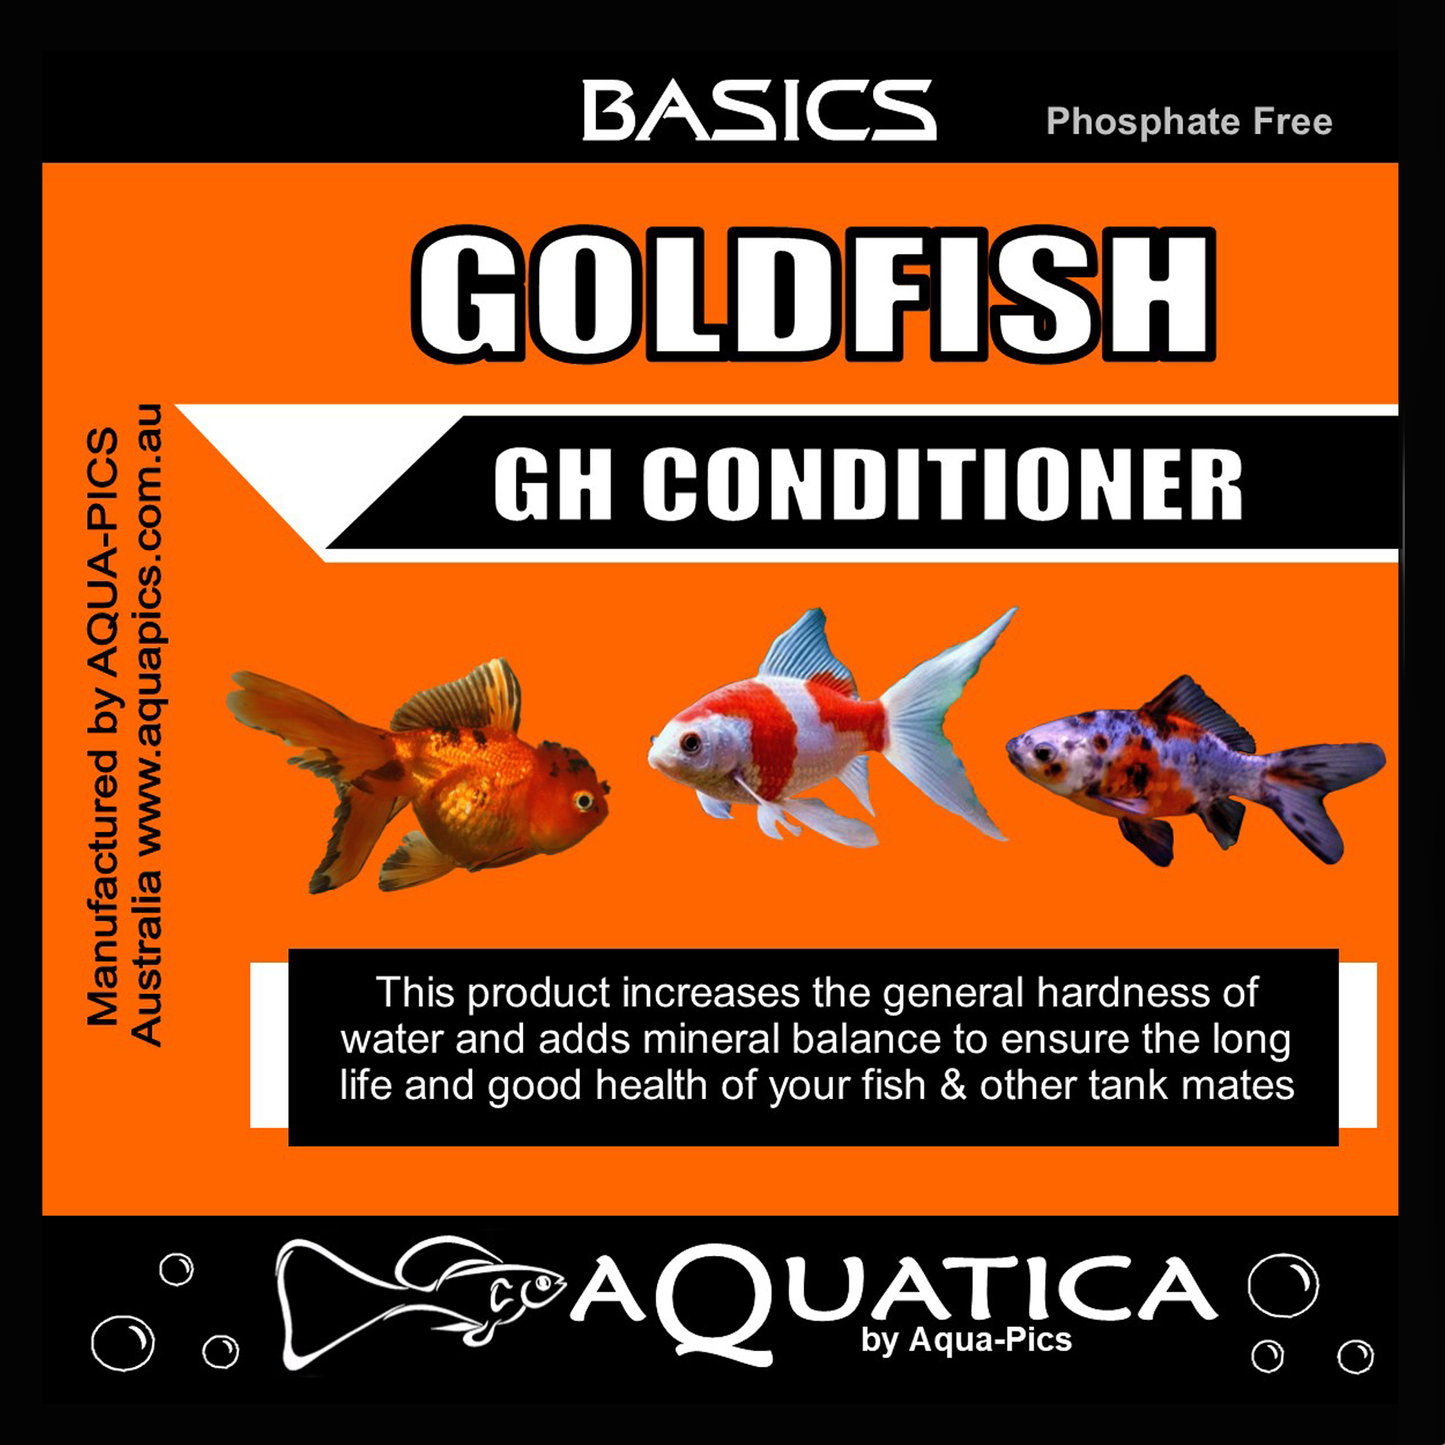 Aquatica Basics Goldfish GH Conditioner 1kg bag